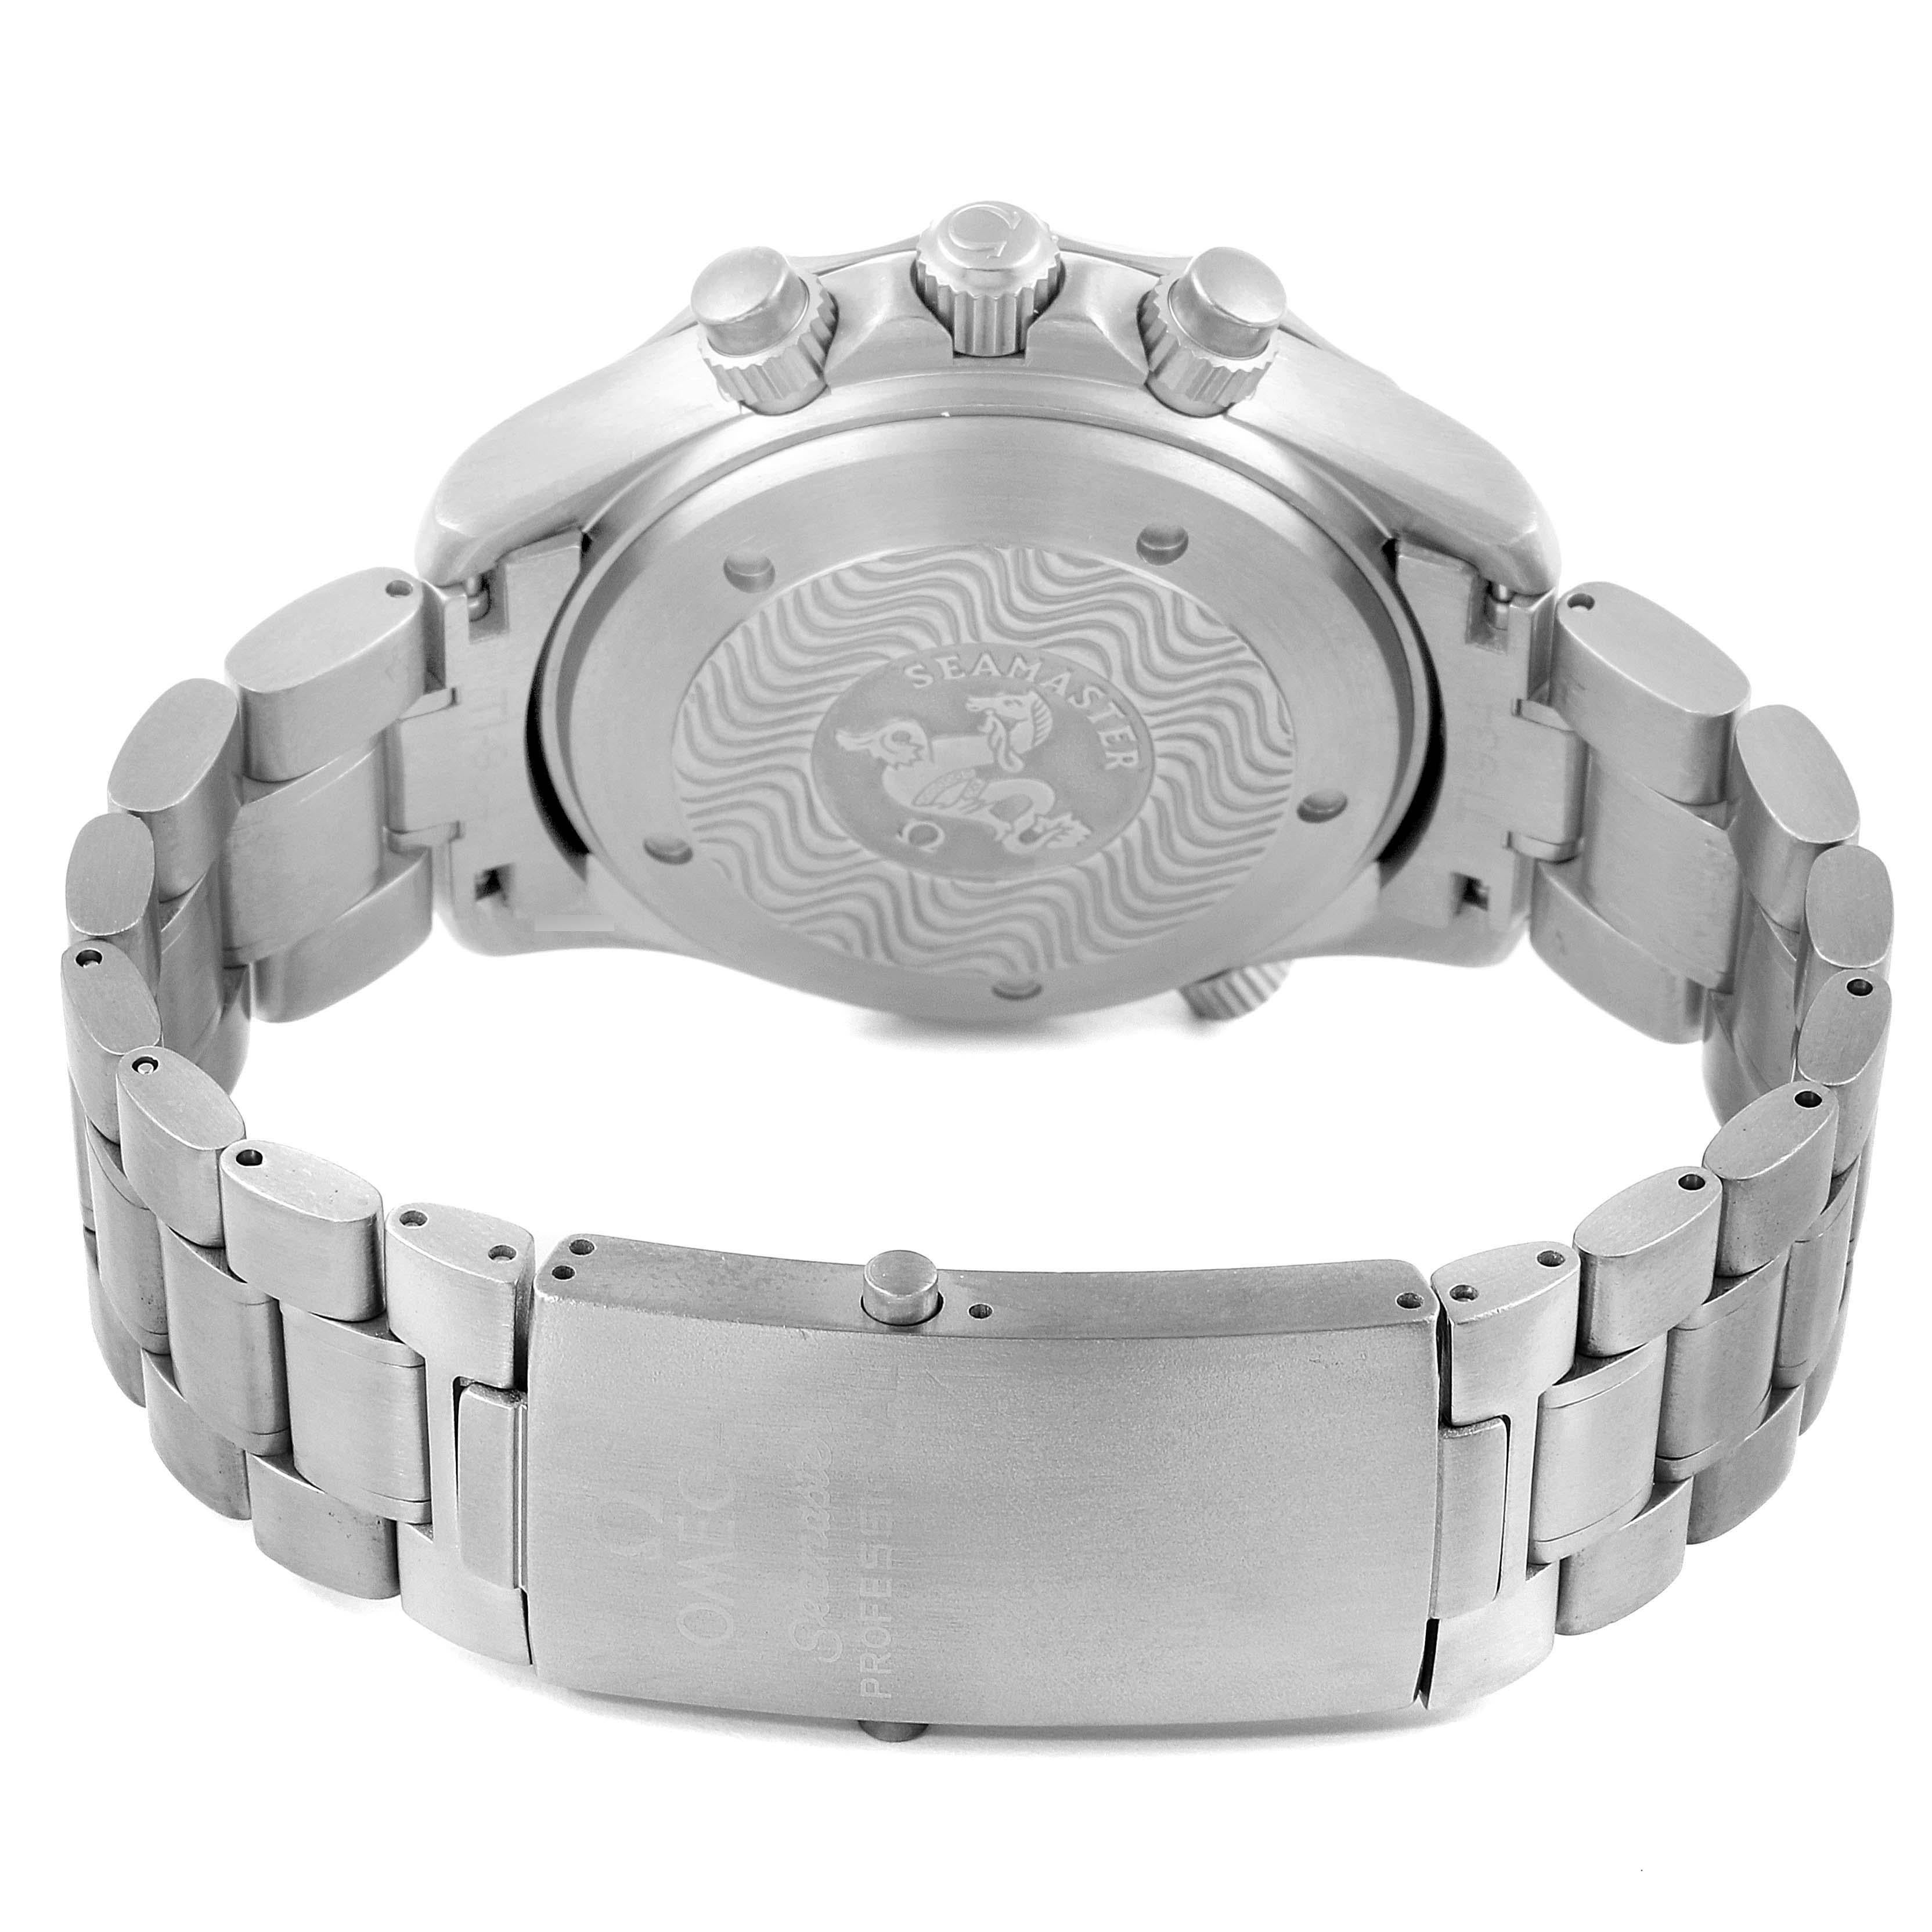 Omega Seamaster Diver Chronograph Titanium Mens Watch 2293.52.00 For Sale 4